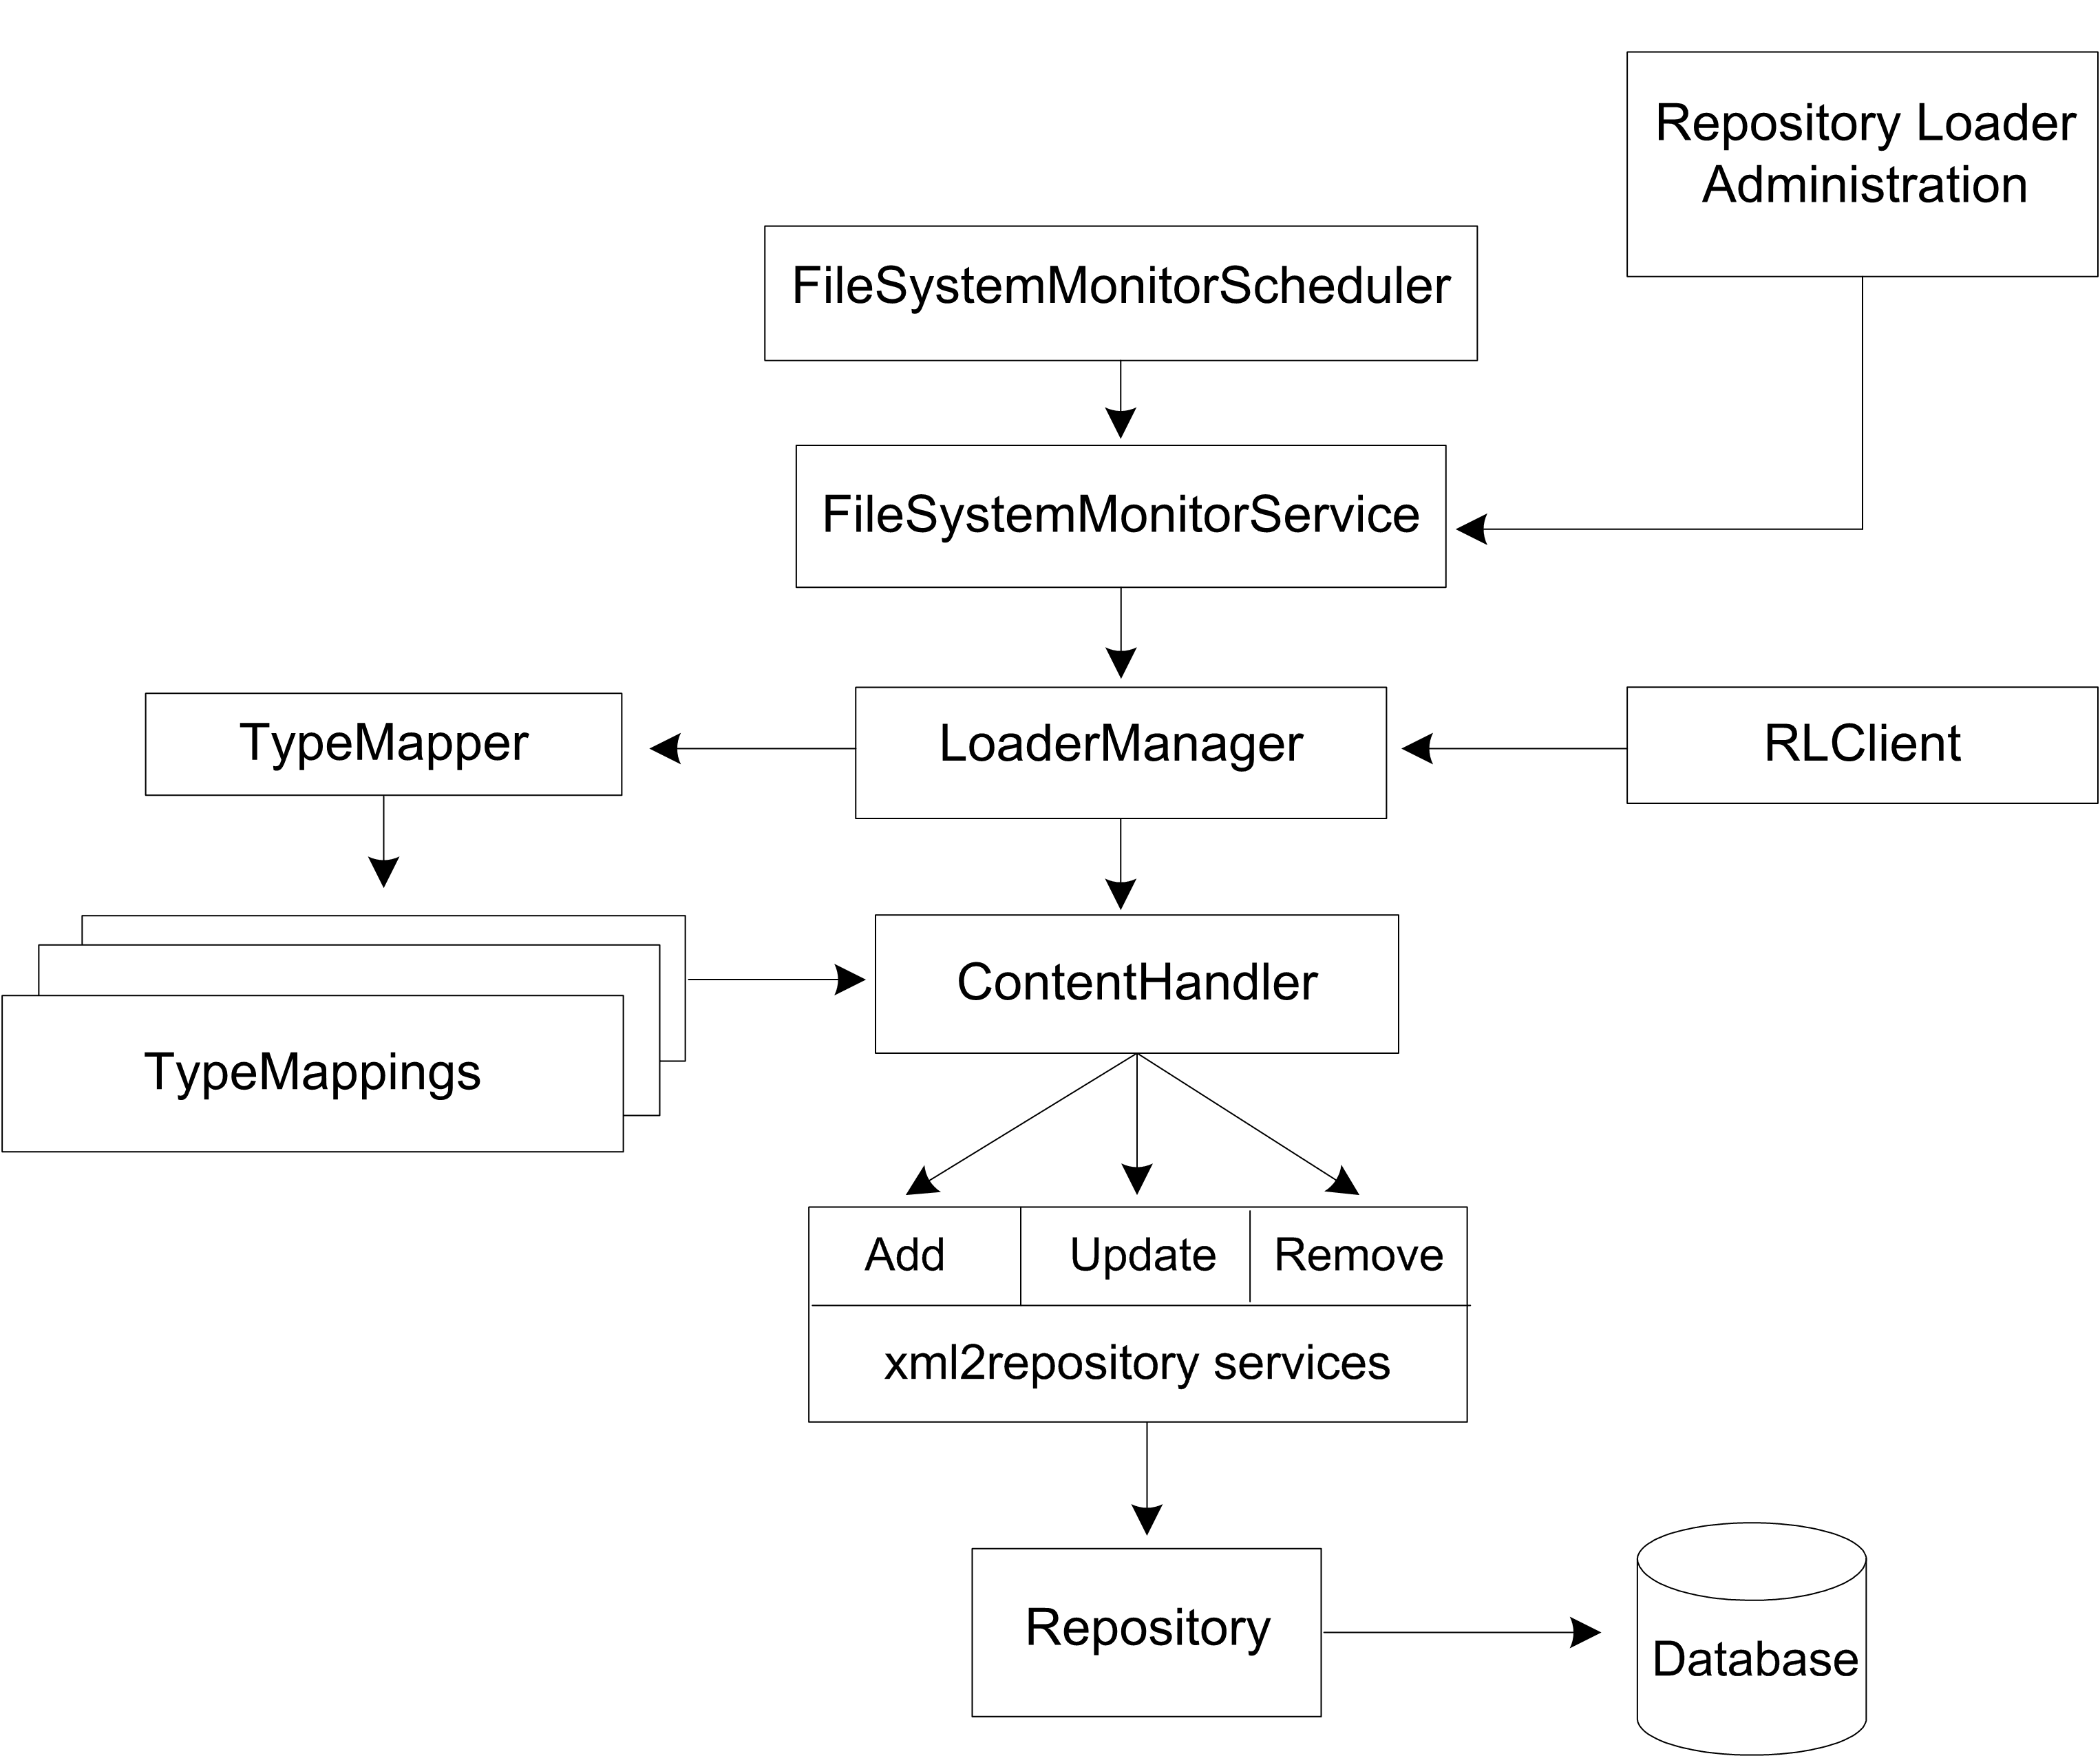 This diagram is described in surrounding text